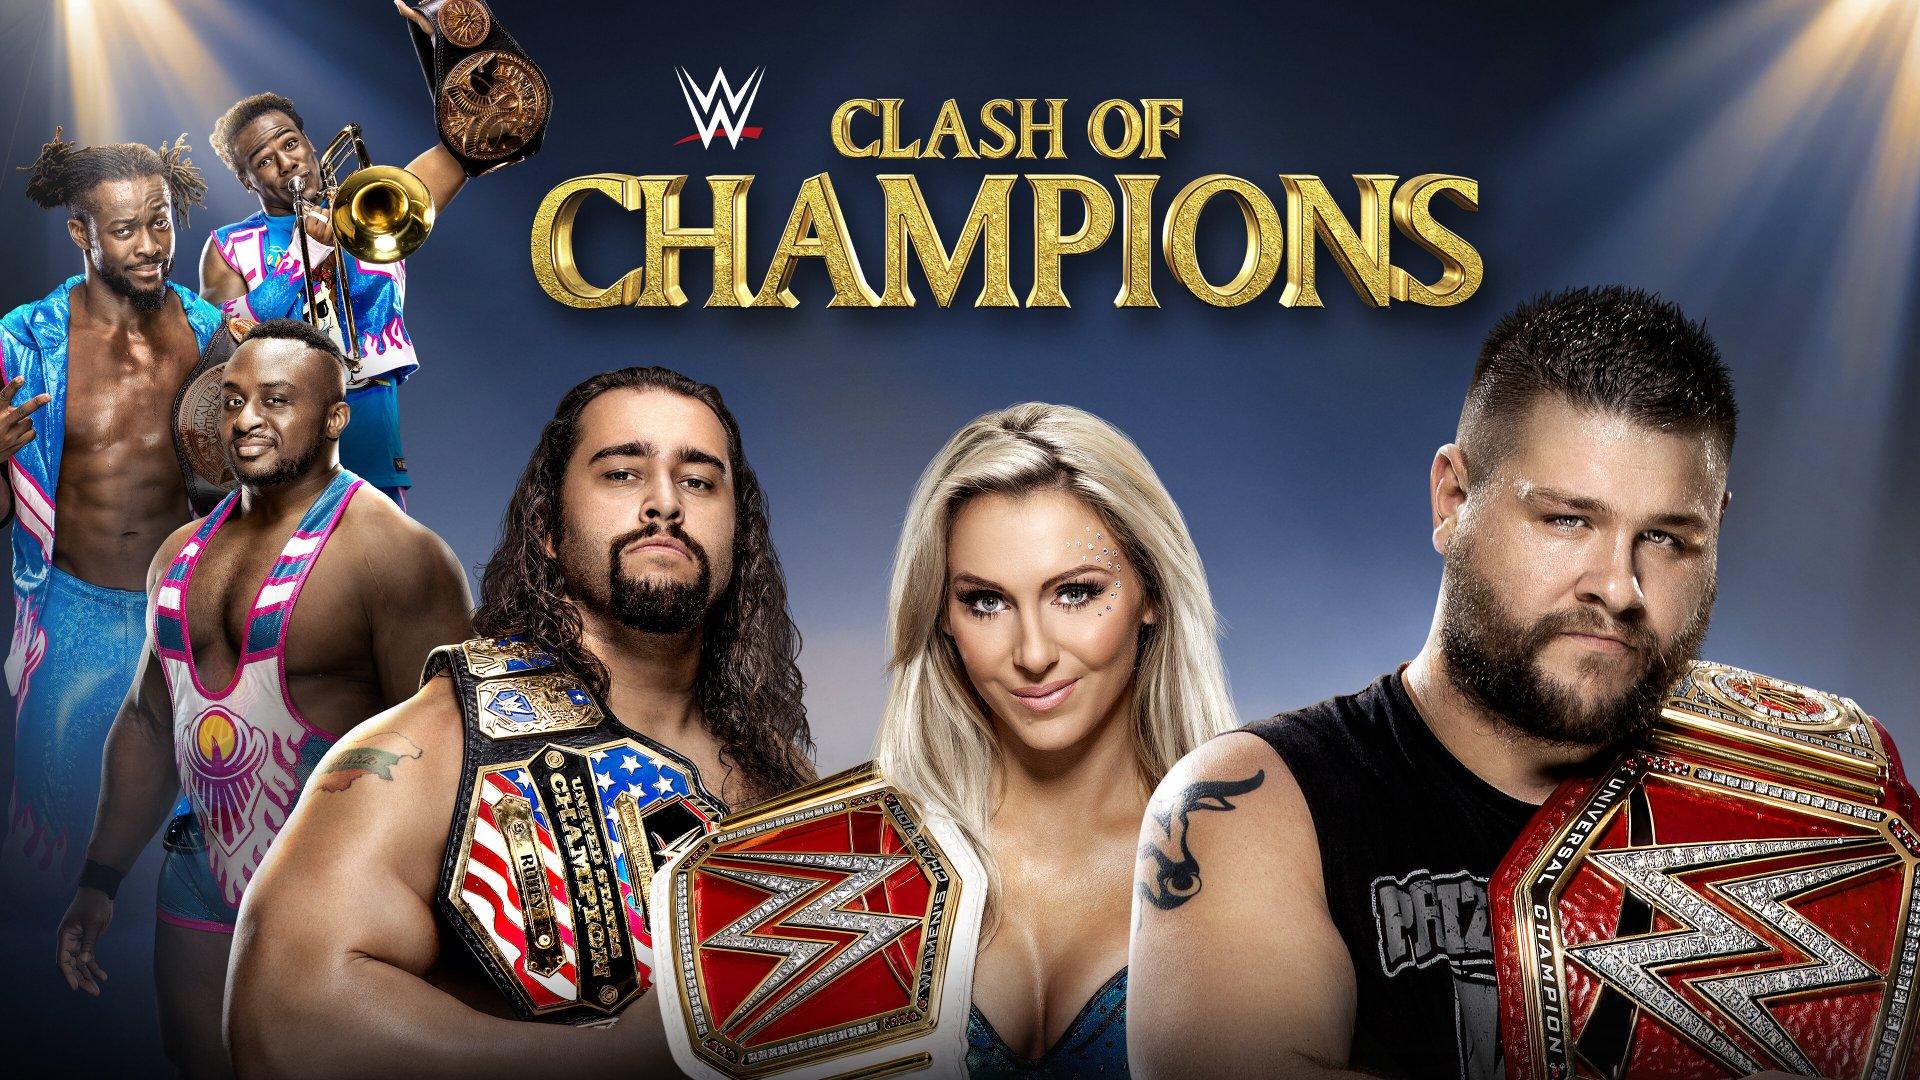 WWE Clash of Champions 2016